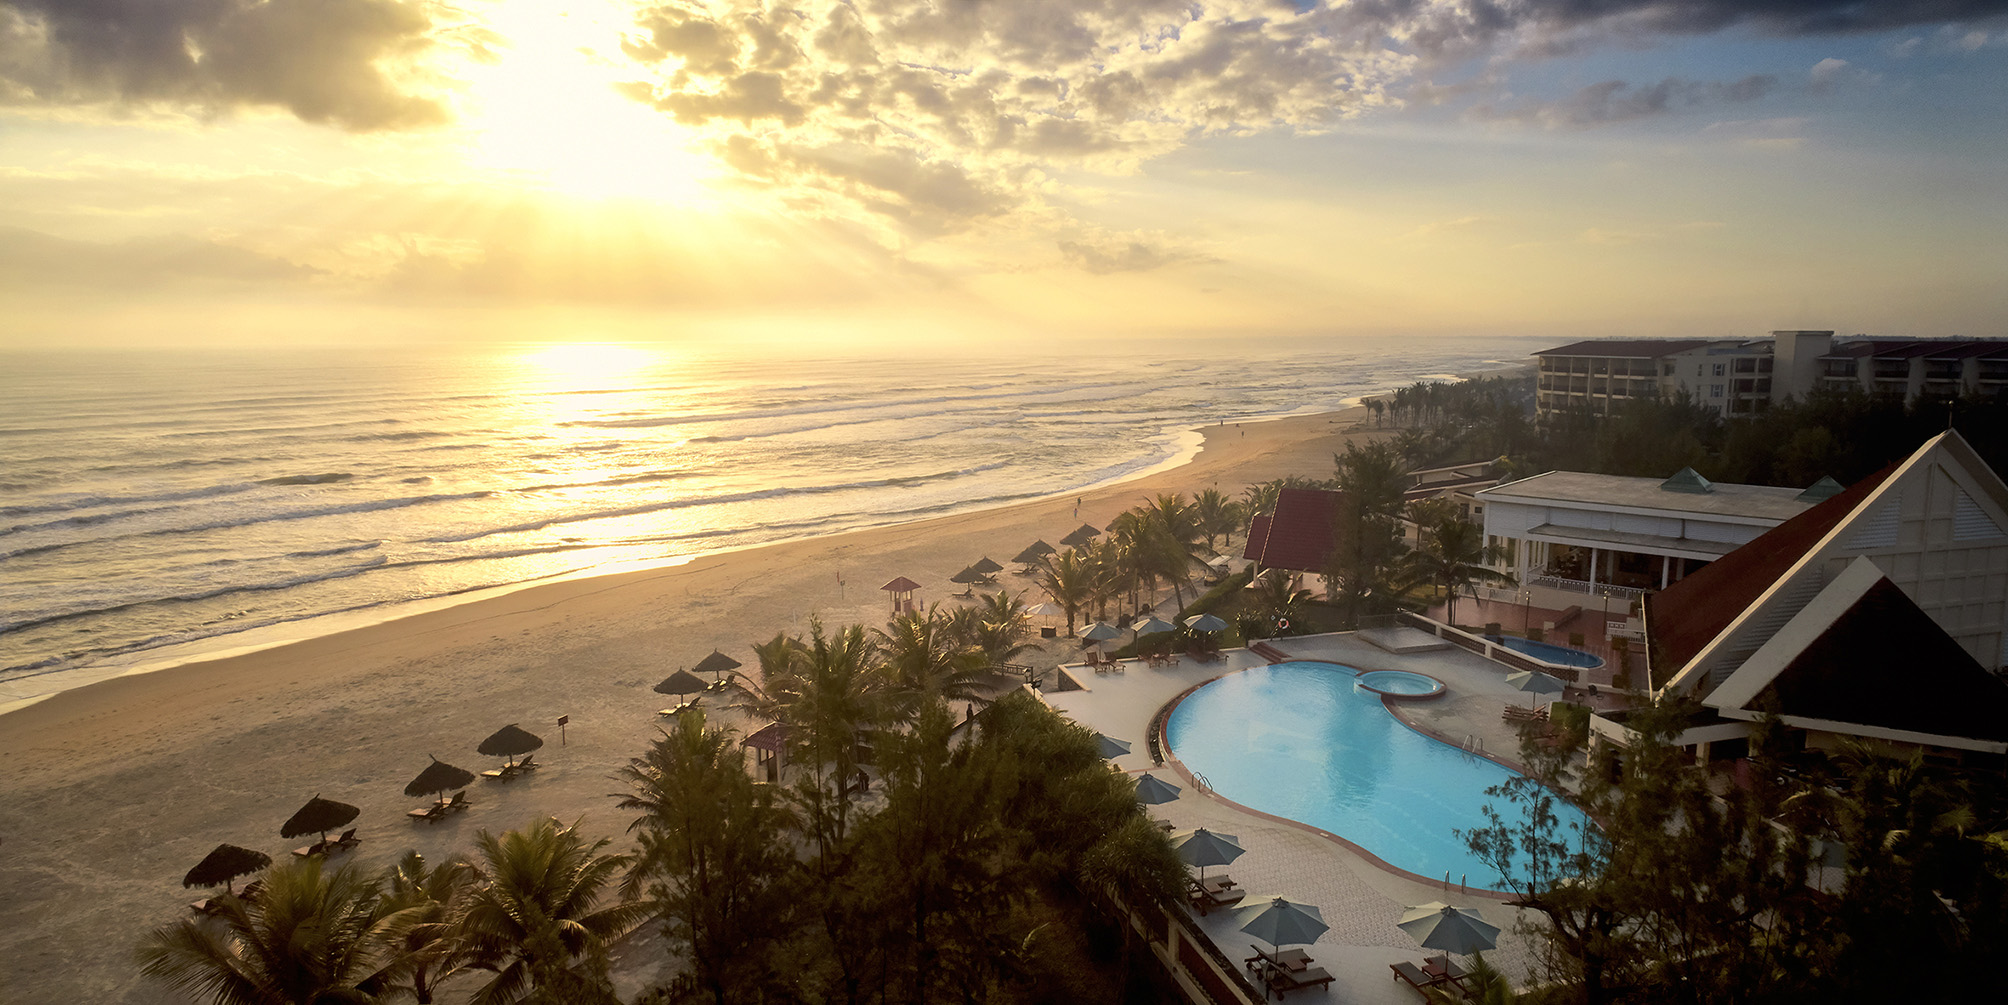 Centara Sandy Beach Resort Danang Resort Da Nang gan bien gia tot - Top 10 resort Đà Nẵng gần biển giá tốt nhất 2020